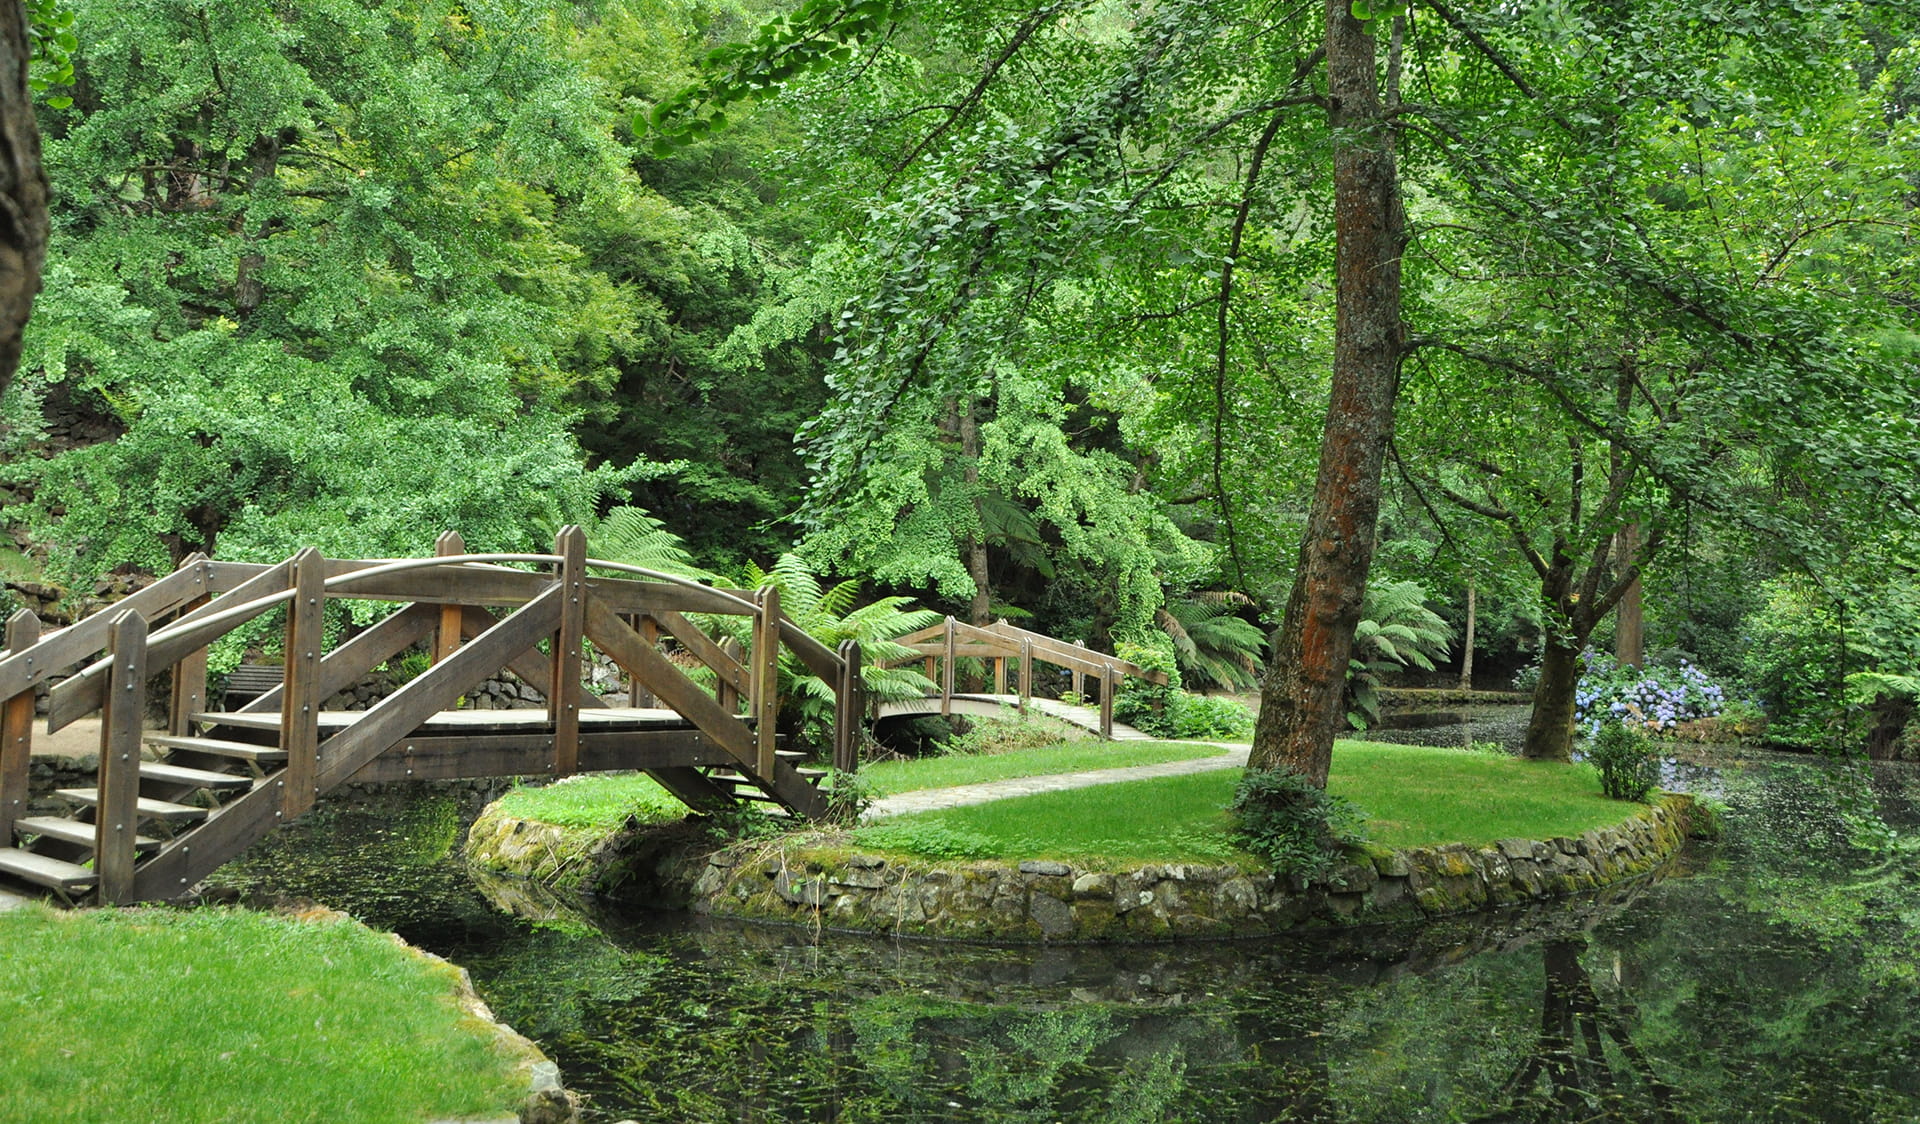 The lake and linking bridge at Alfred Nicholas Memorial Garden